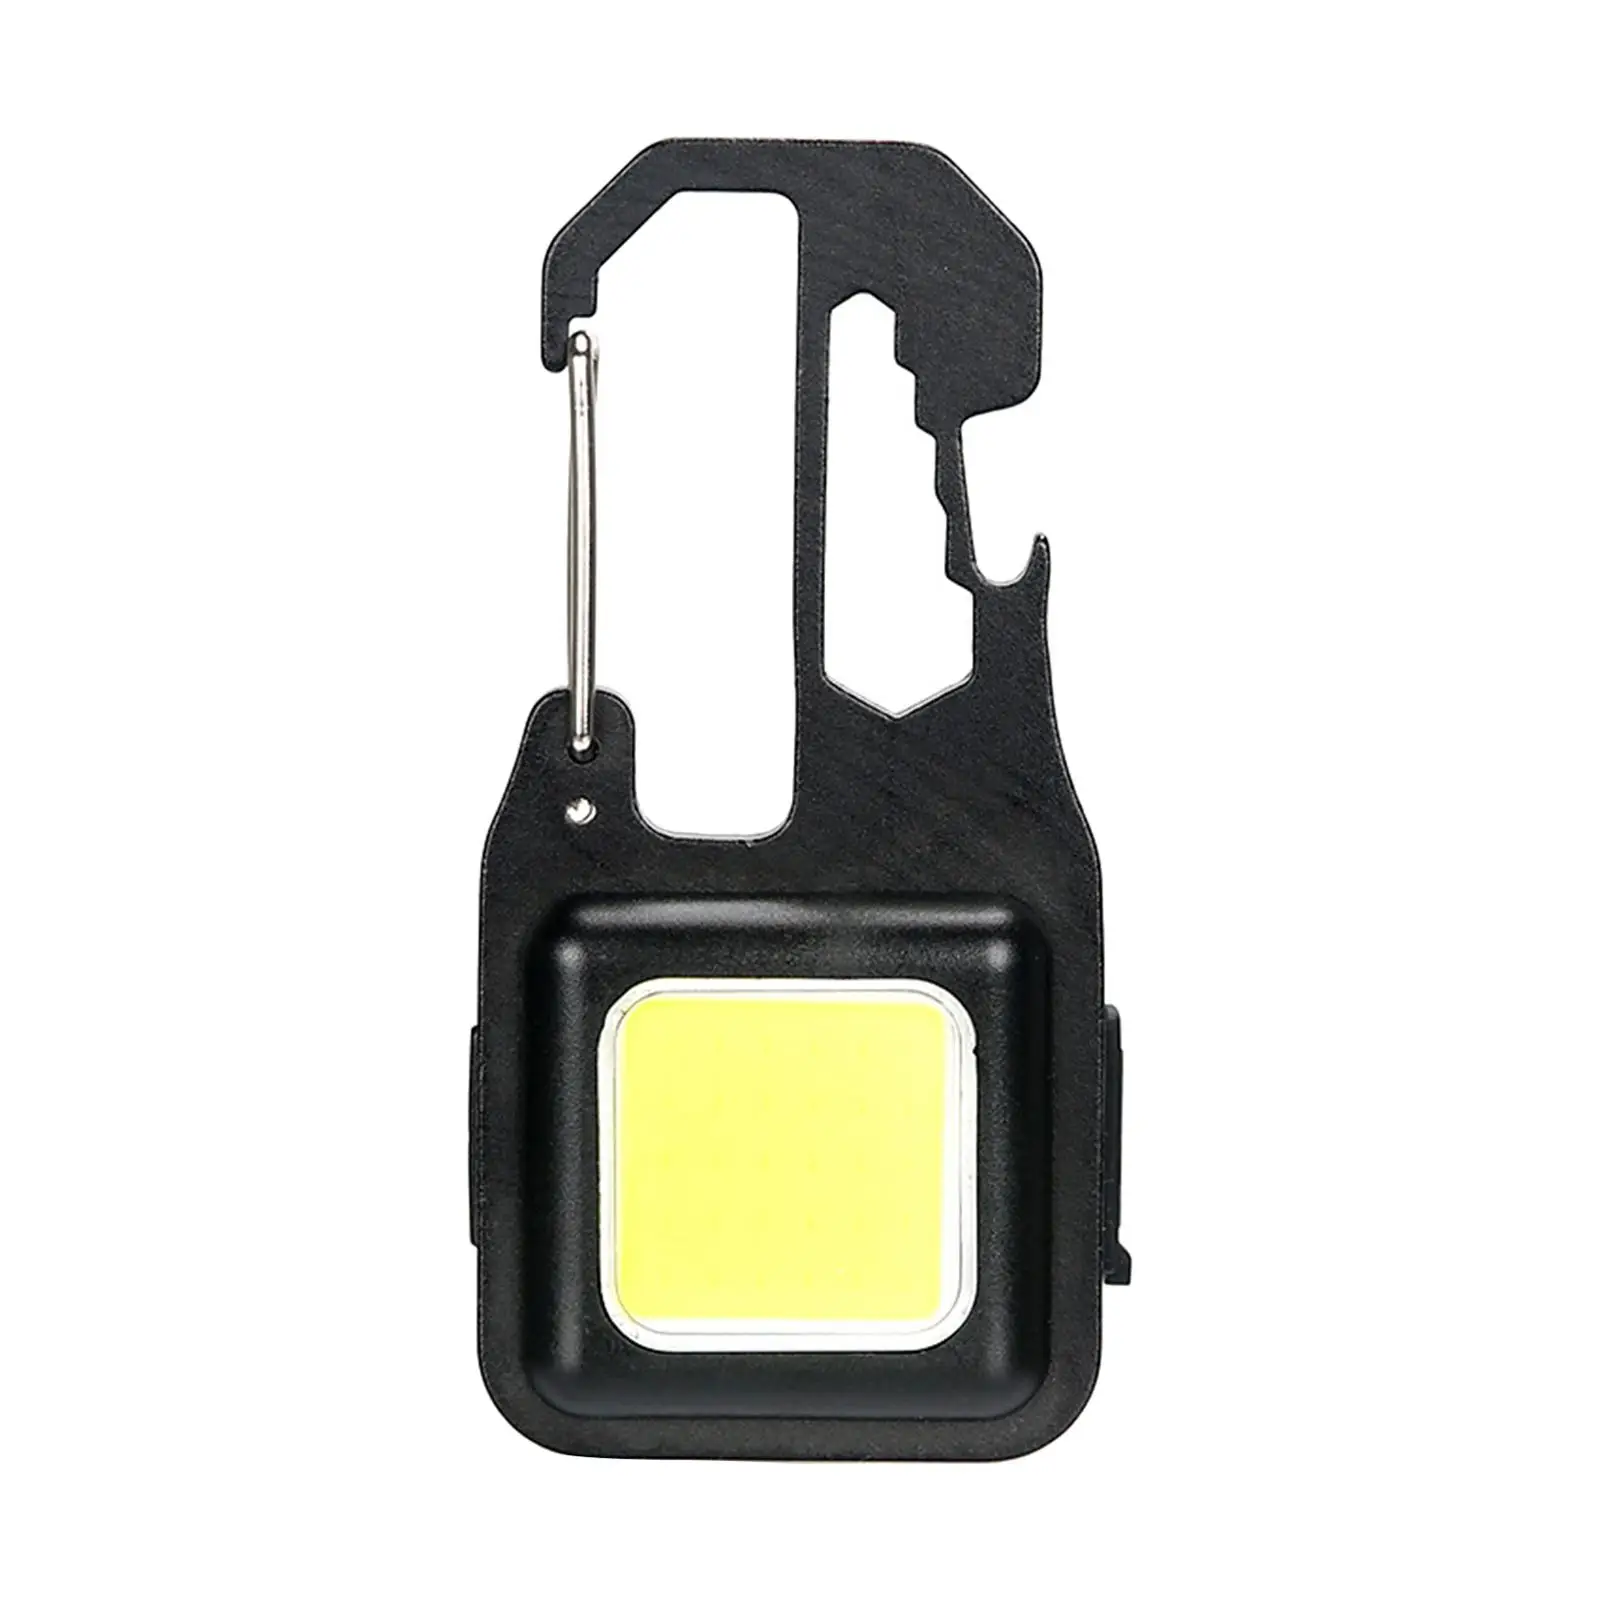 Compact COB flashlights Keychain Bottle Opener Camping Lamp Magnet Base Keyring pocket USB Rechargeable LED Torch Light